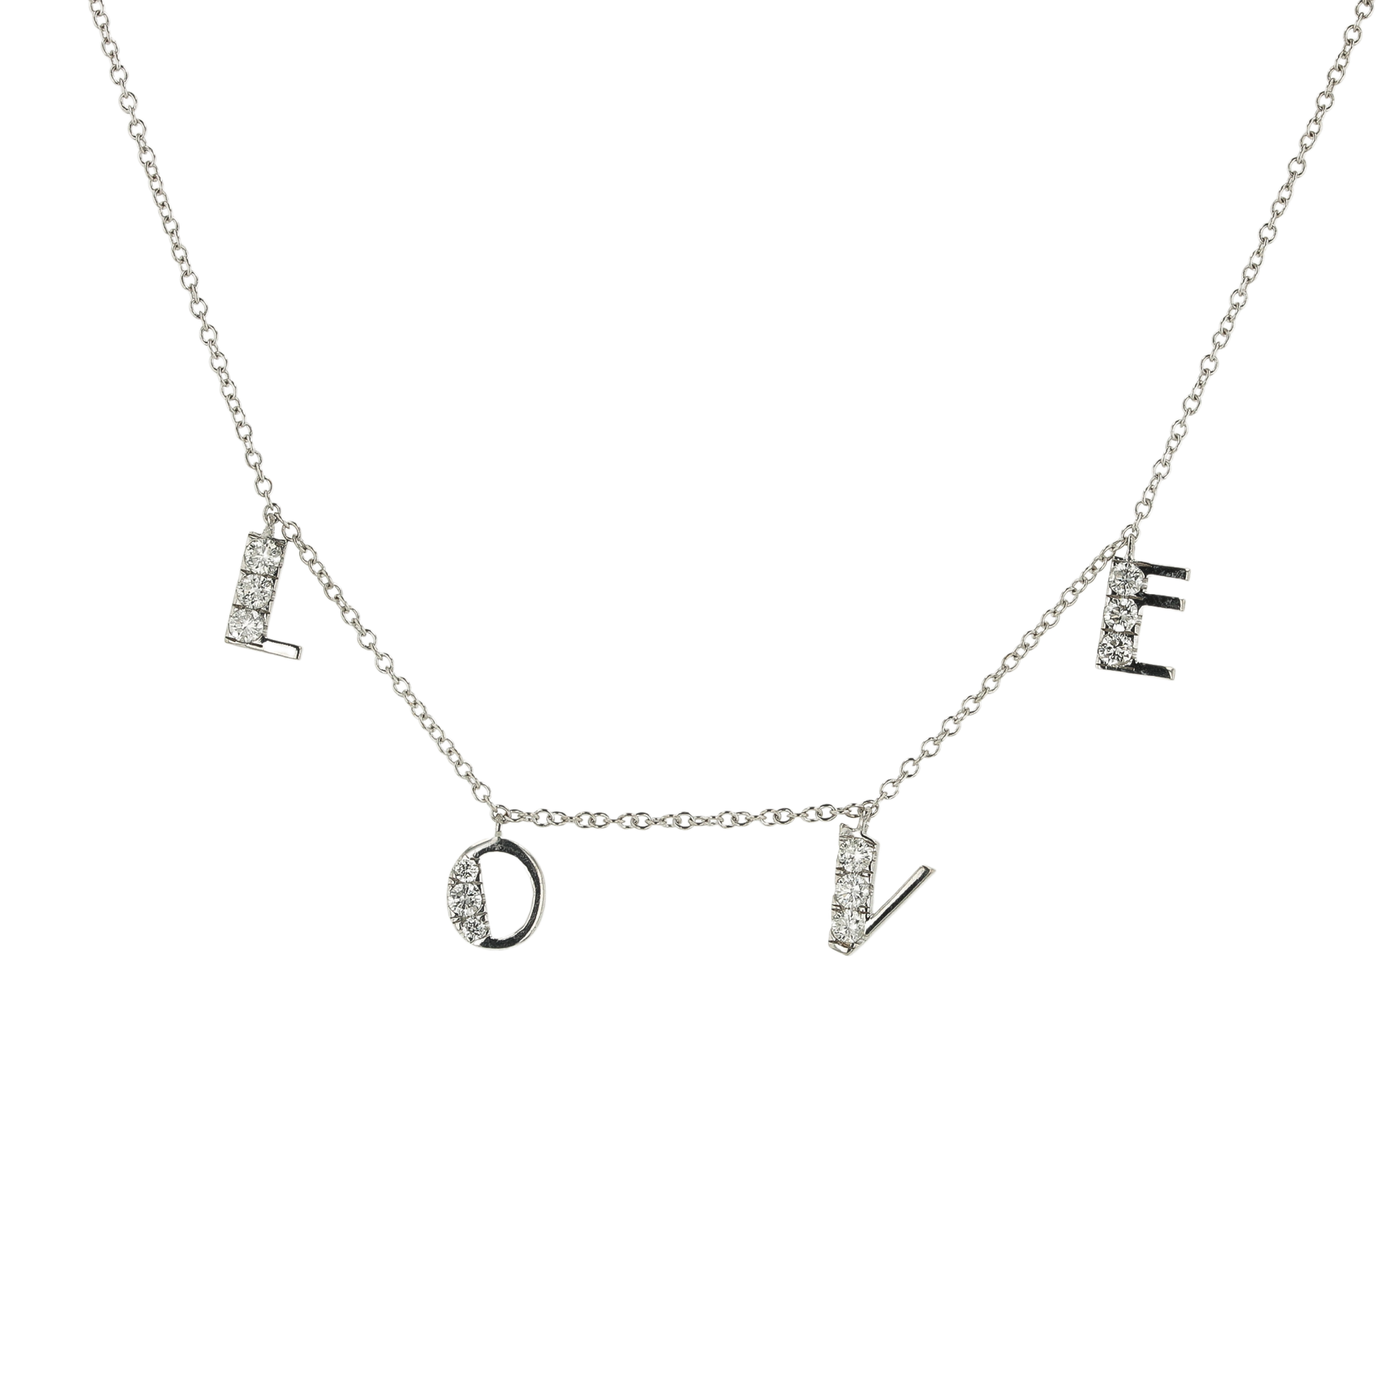 "L-O-V-E" 0.33 CTTW Diamond Necklace in 14K White Gold